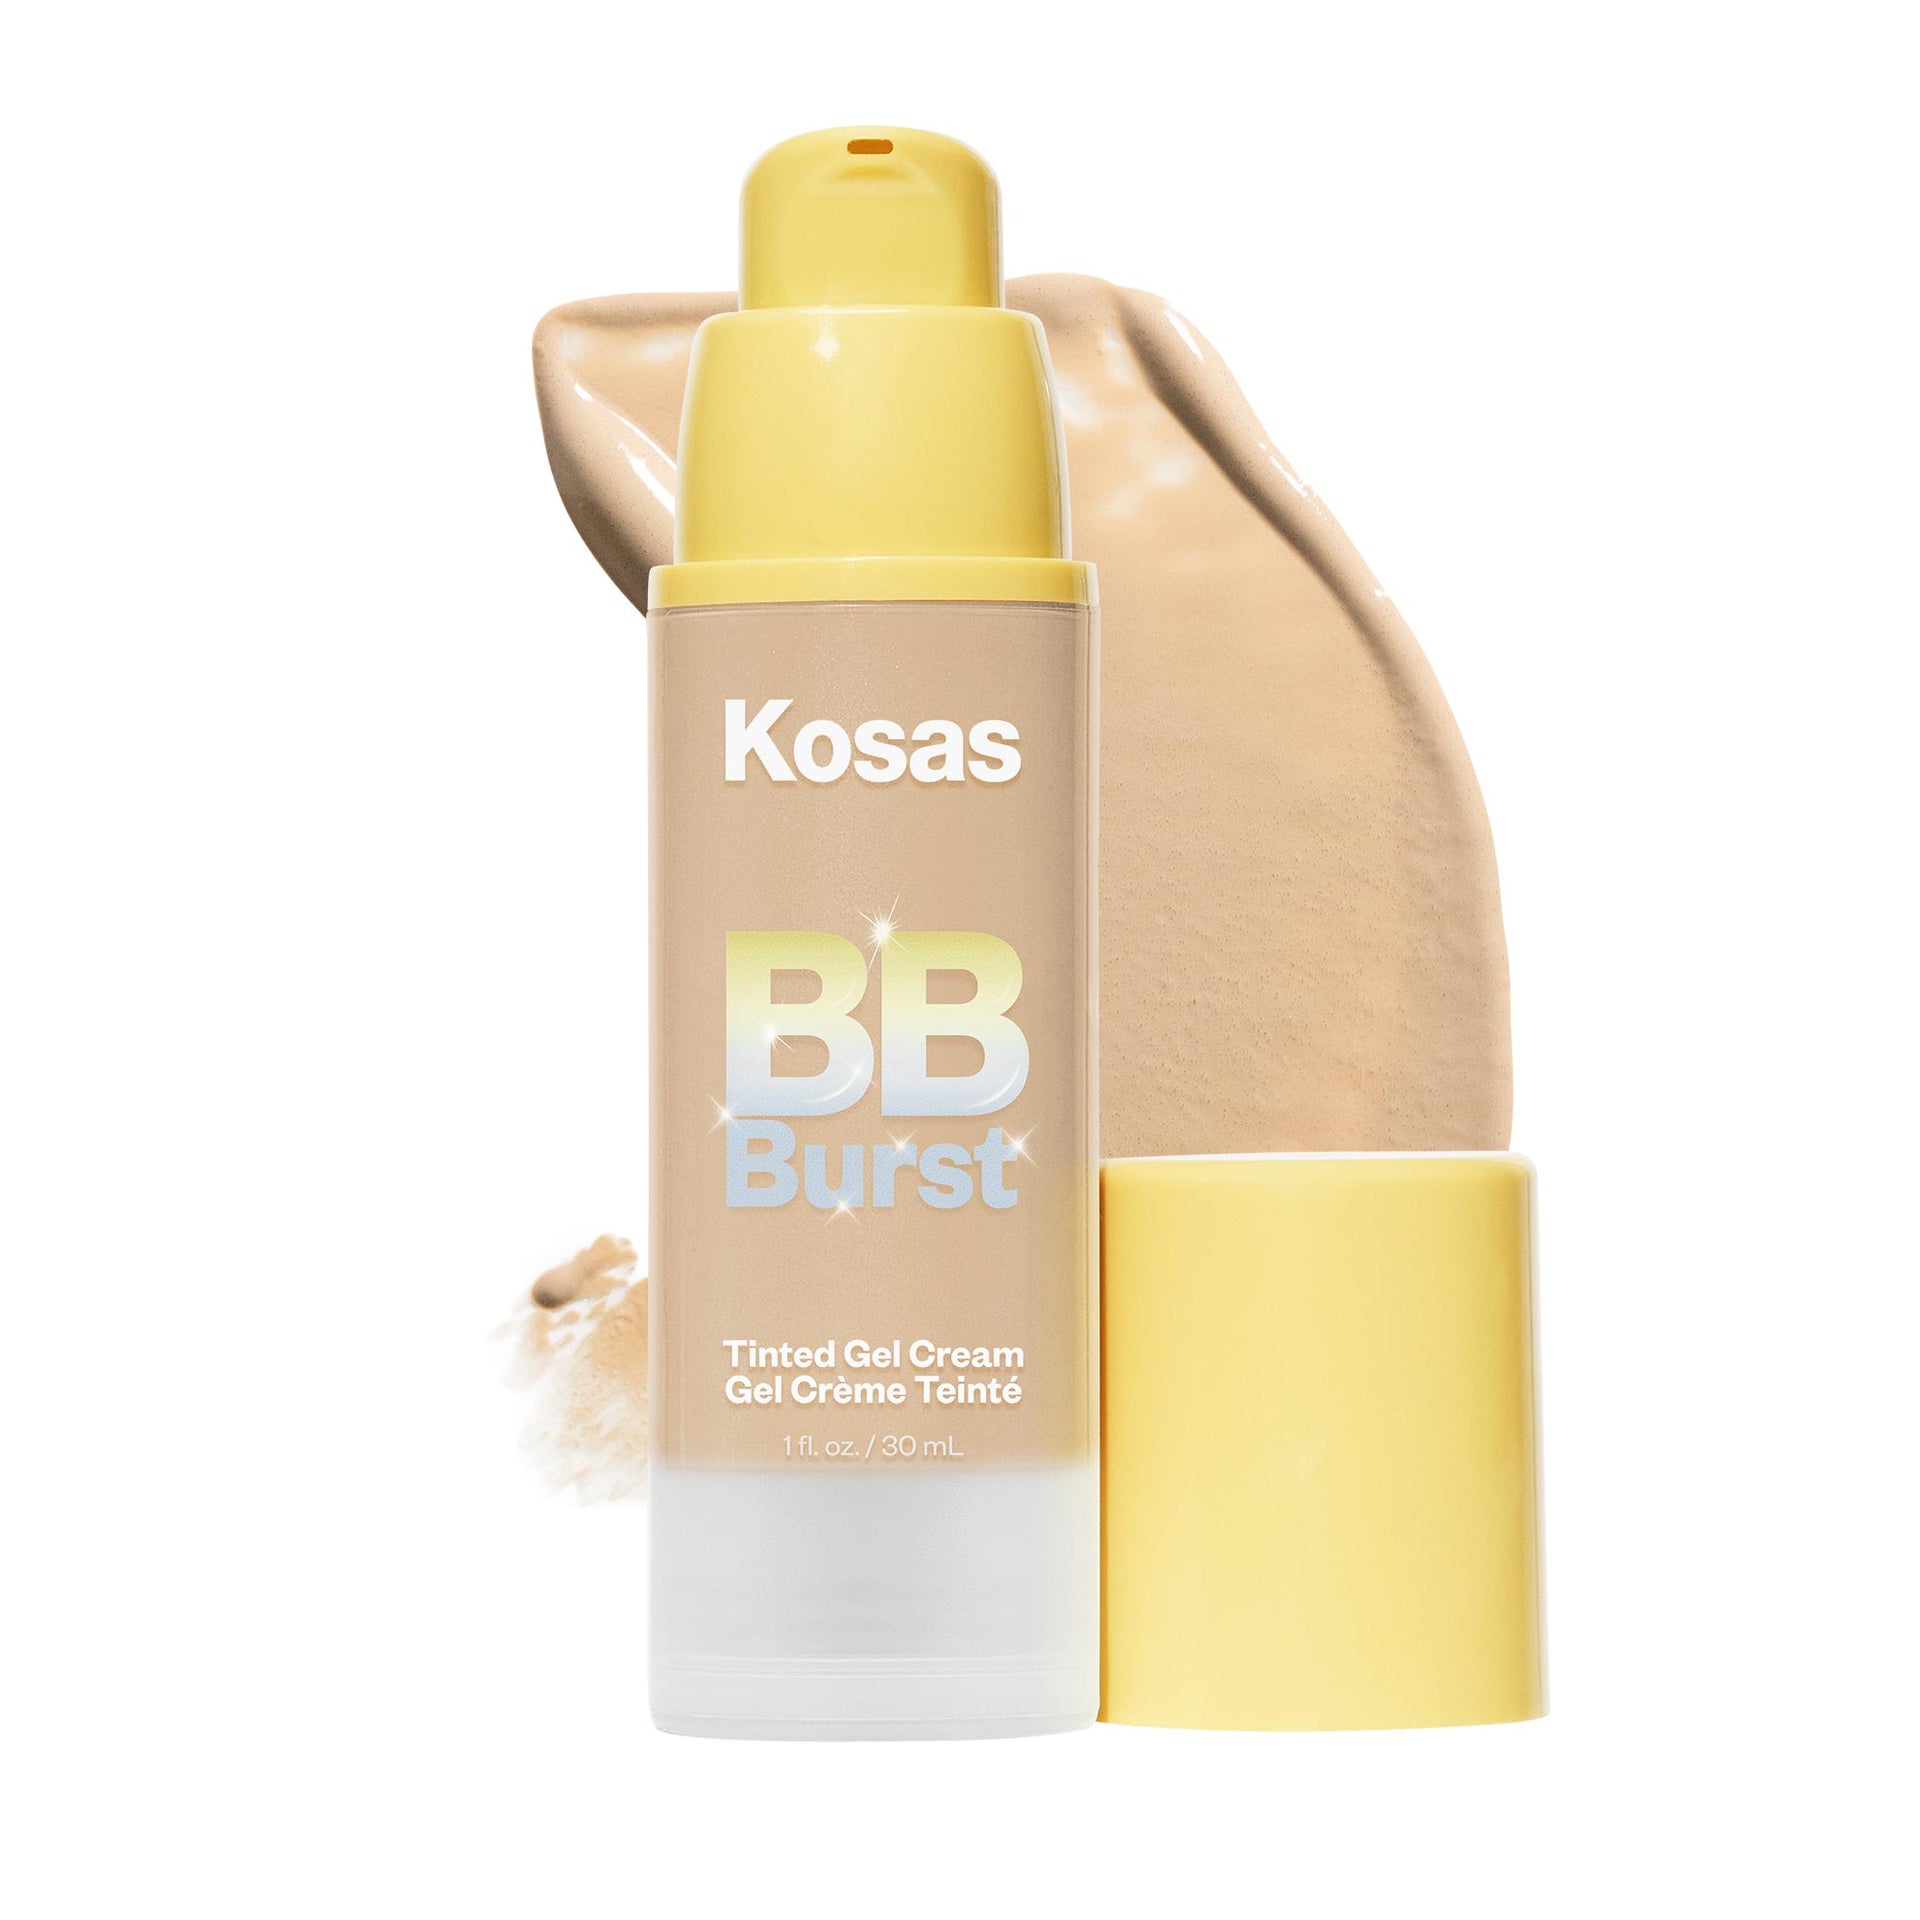 Kosas BB Burst in the shade Medium Neutral Olive 22